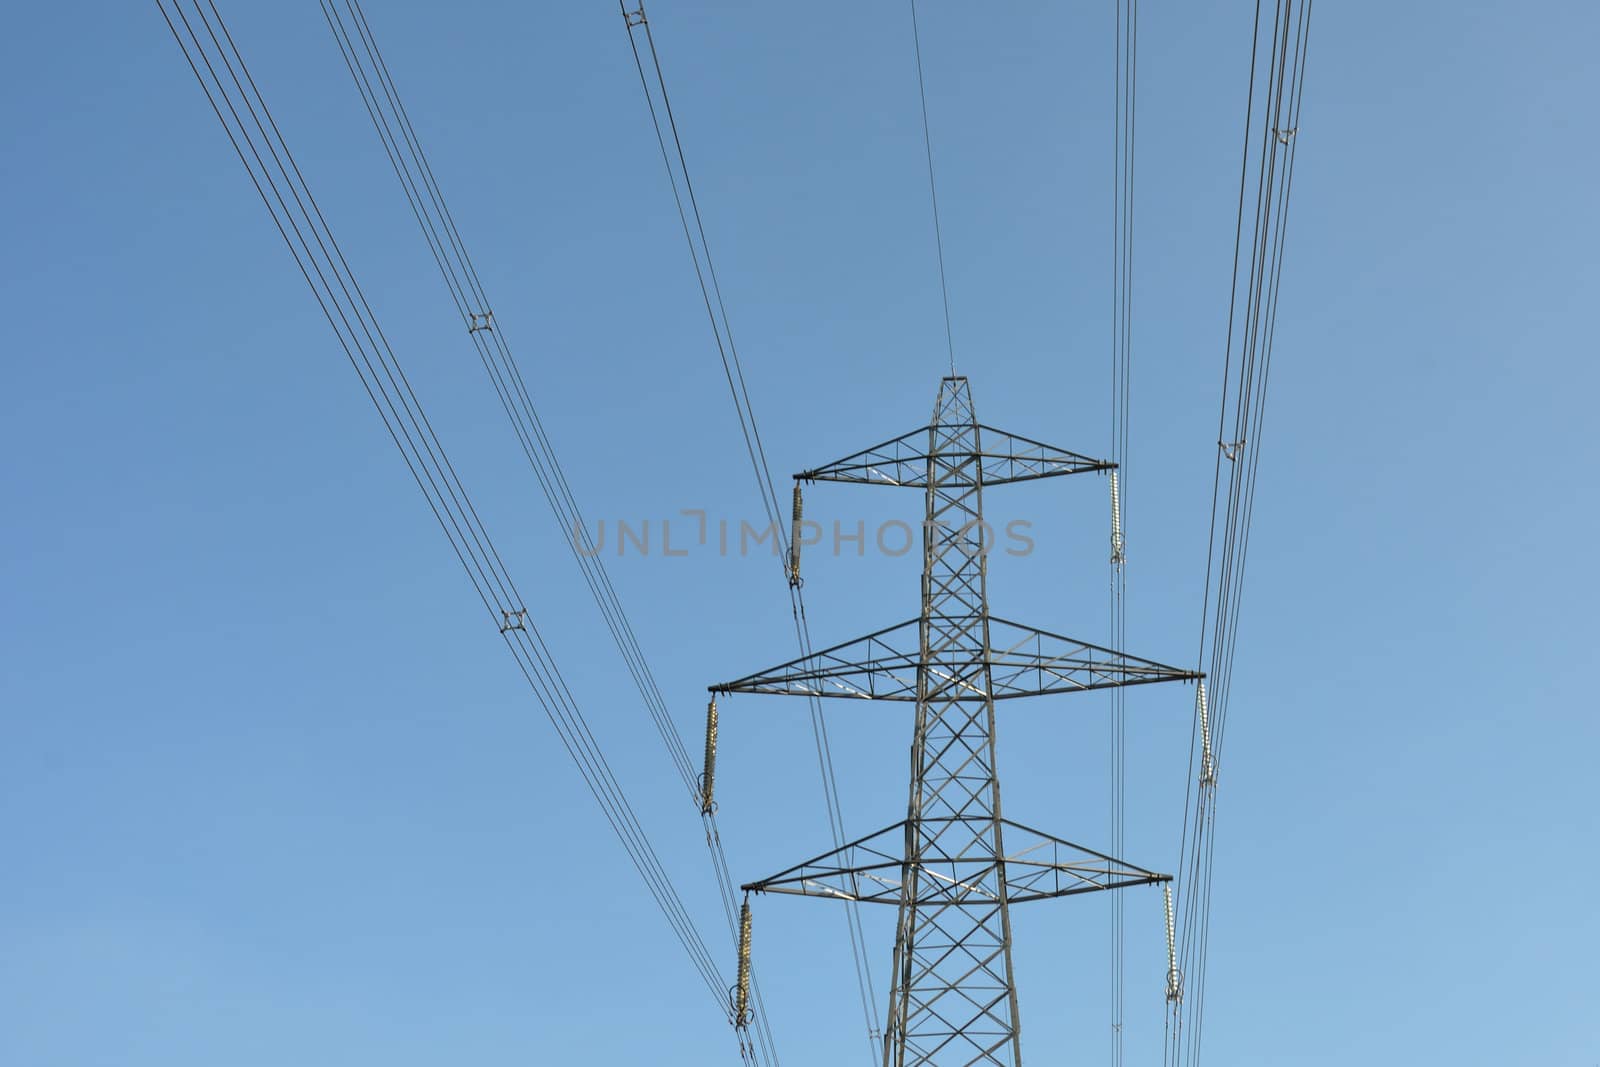 High Voltage Electricity Pylon by pauws99